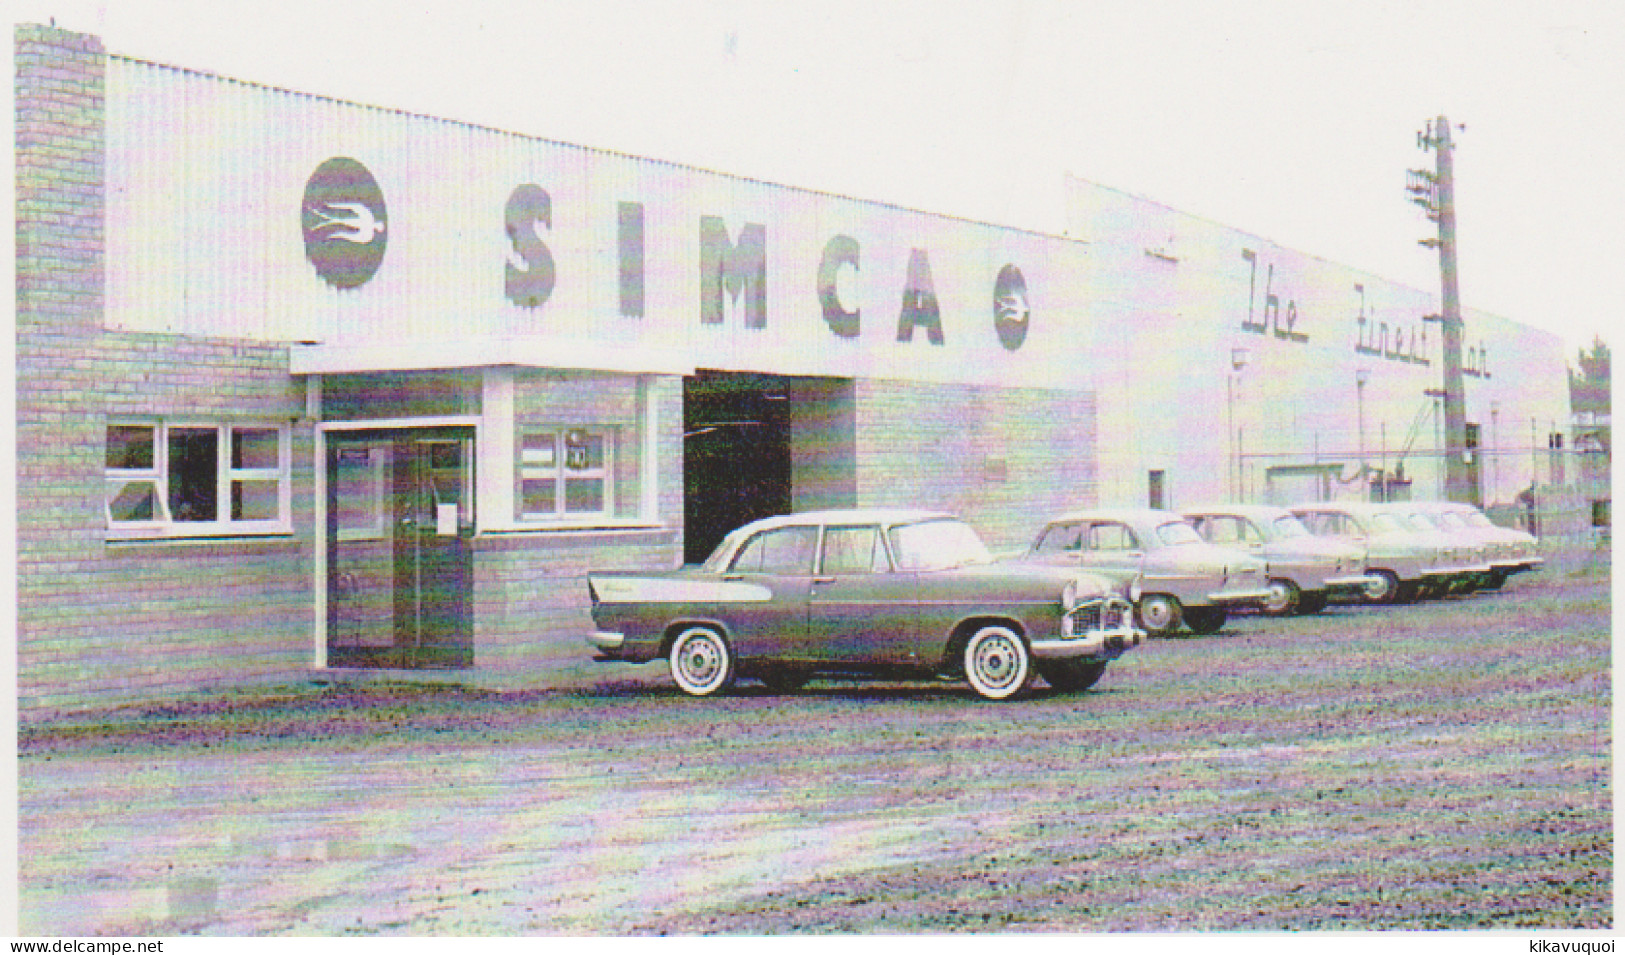 SIMCA GARAGE 1961 - CARTE POSTALE 10X15 CM NEUF - Passenger Cars